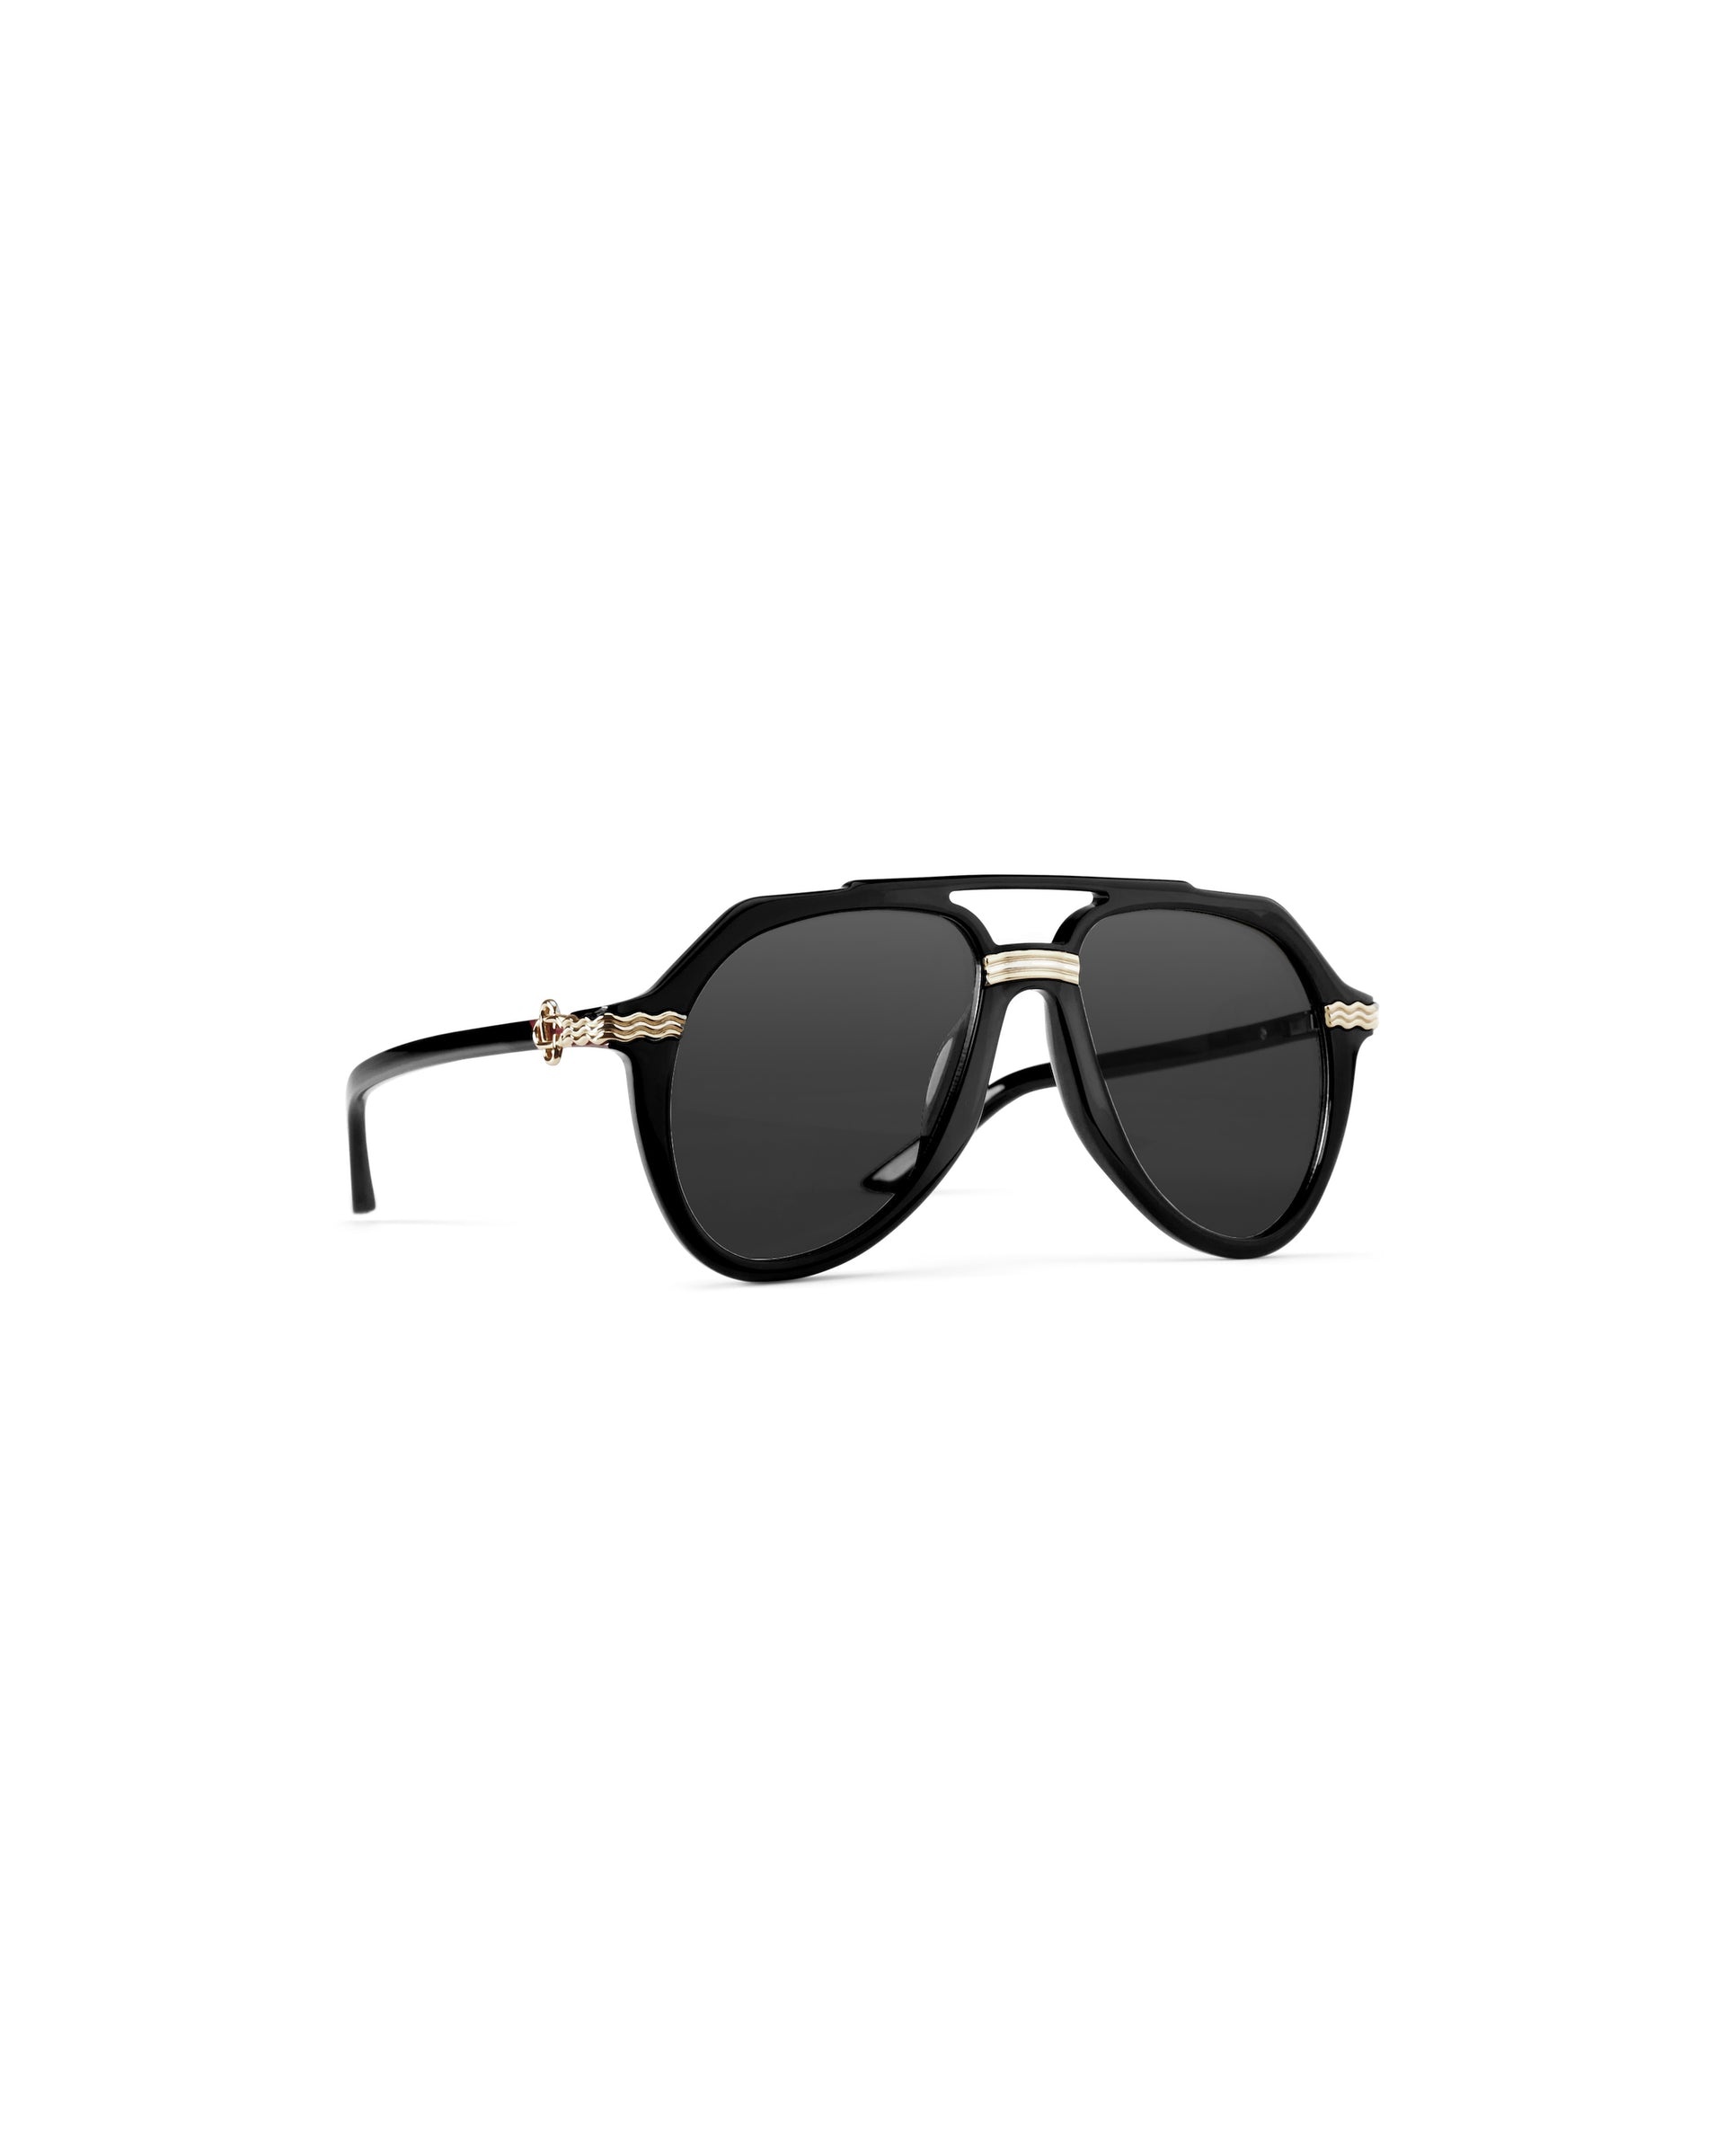 Rajio Black & Gold Sunglasses - 1